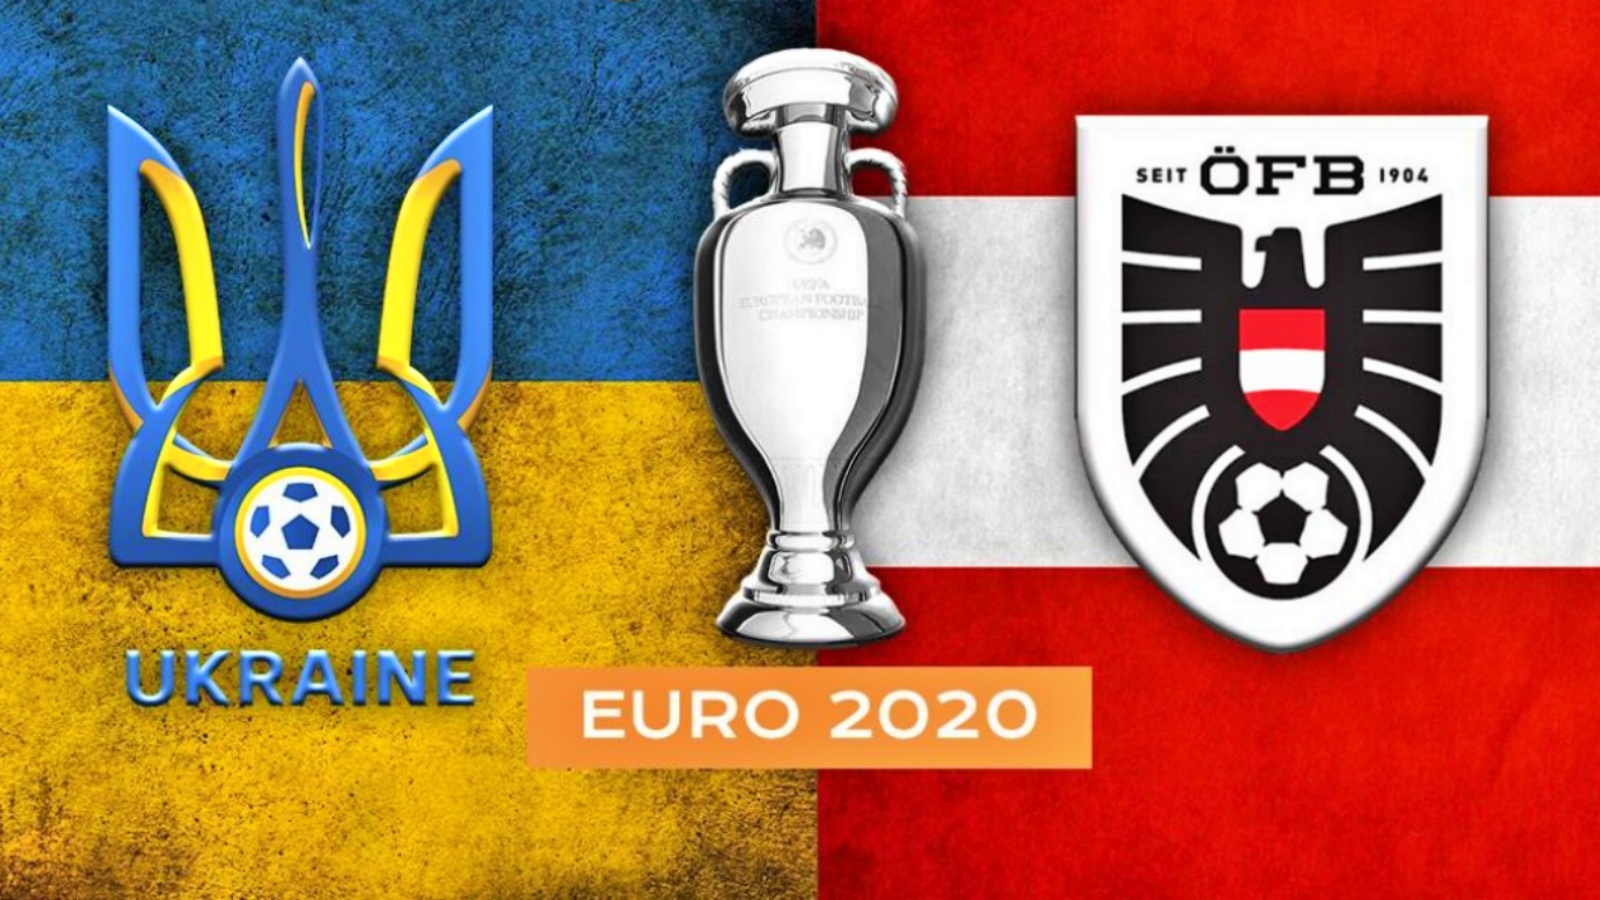 UKRAINA - AUSTRIA LIVE PRO TV EURO 2020